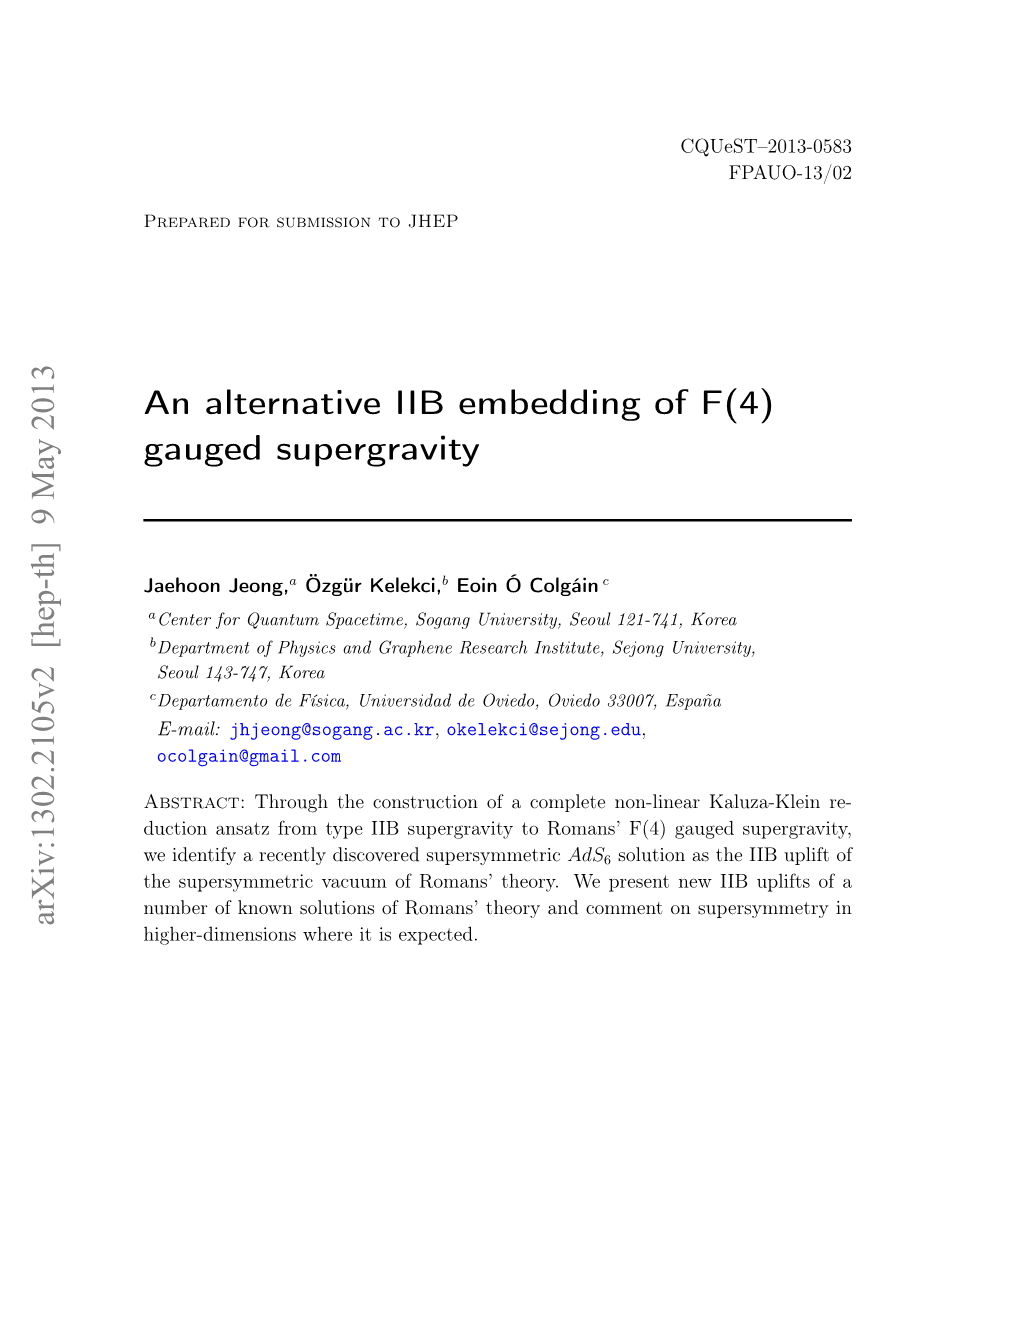 An Alternative IIB Embedding of F(4) Gauged Supergravity Arxiv